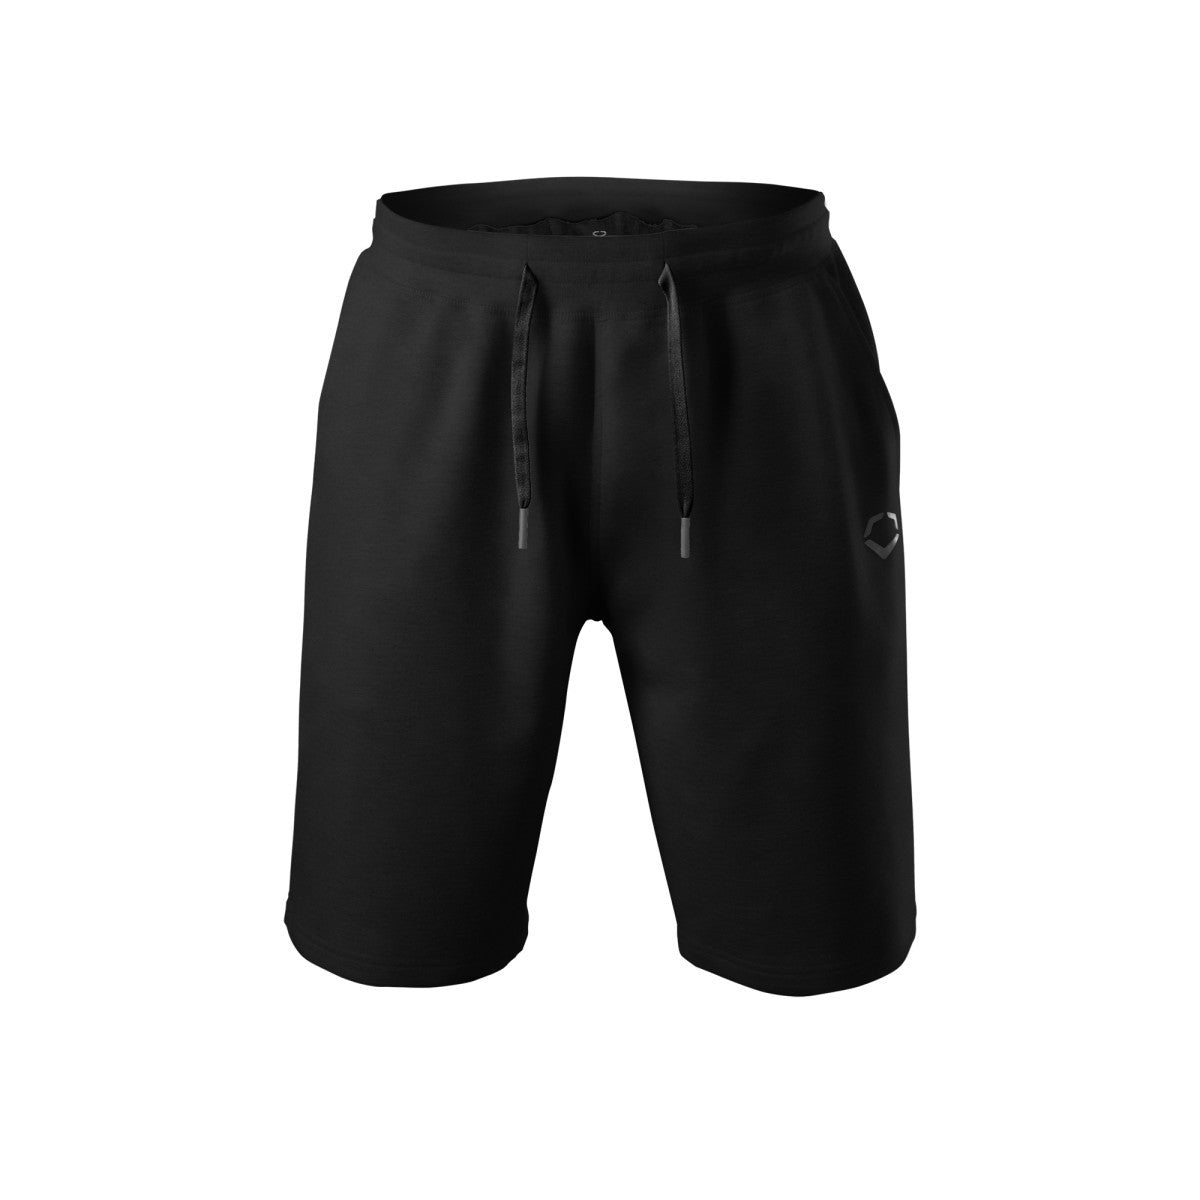 Evoshield Men's Pro Team Clubhouse Shorts - Black